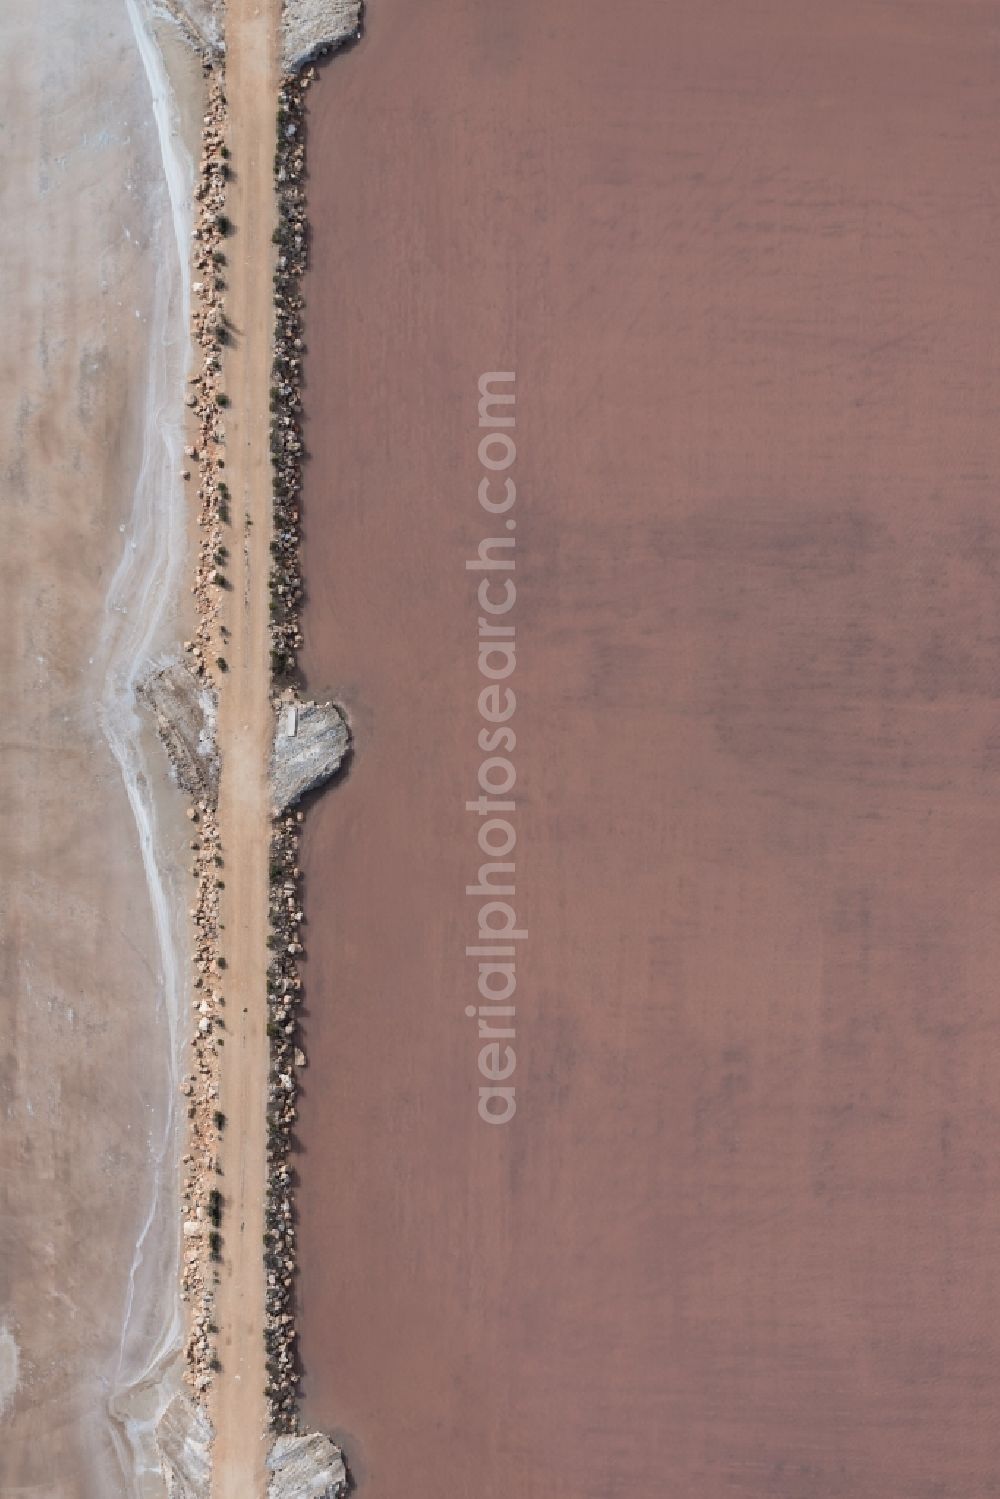 Aerial photograph Llucmajor - Brown - white salt pans for salt extraction in Llucmajor in Balearic Islands, Spain